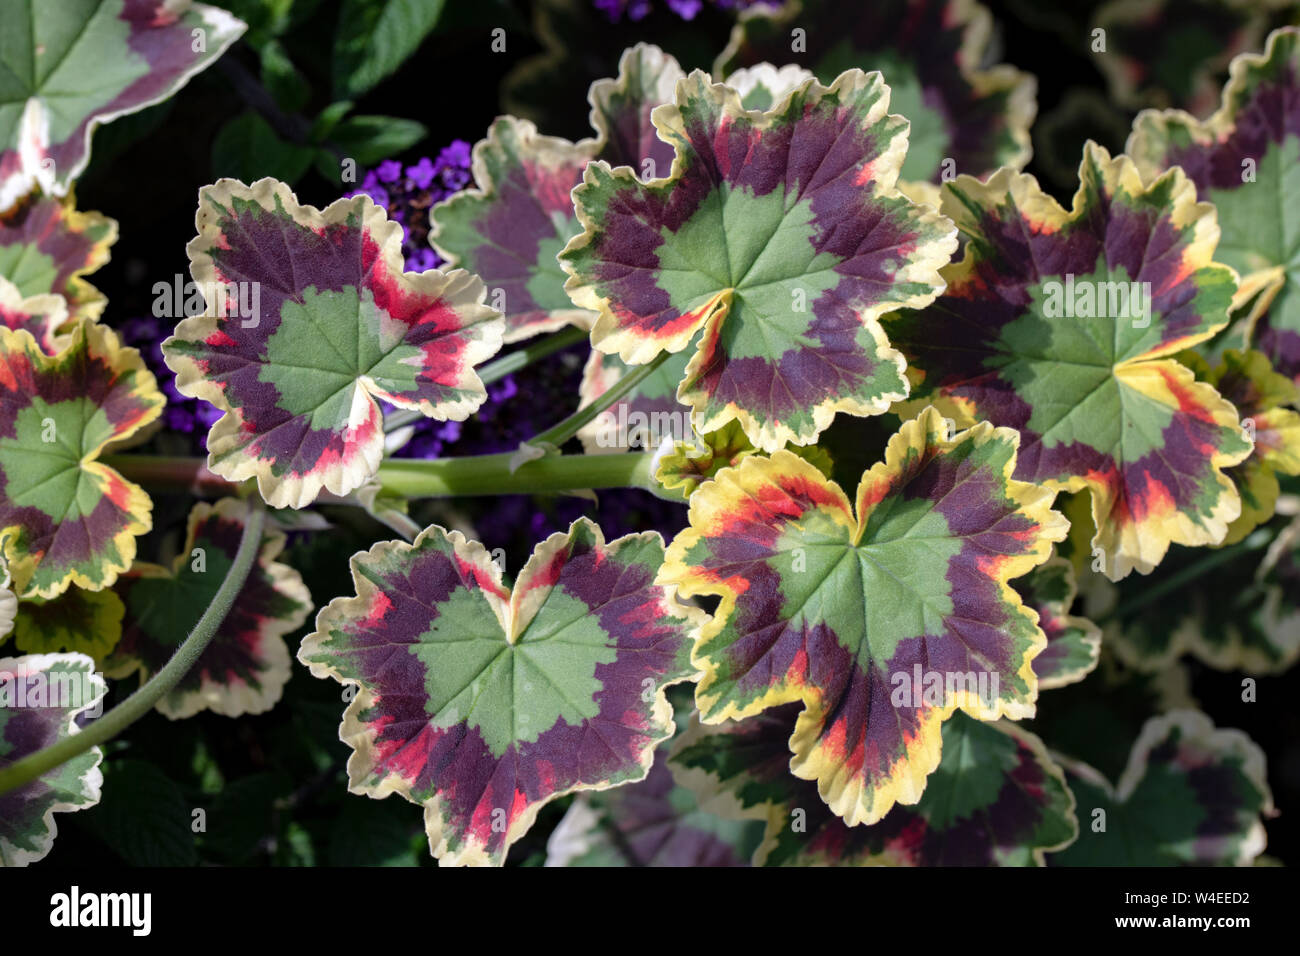 (Pelargonium tricolor) or Three-colored Geranium - Butchart Gardens - Brentwood Bay, near Victoria, Vancouver Island, British Columbia, Canada Stock Photo